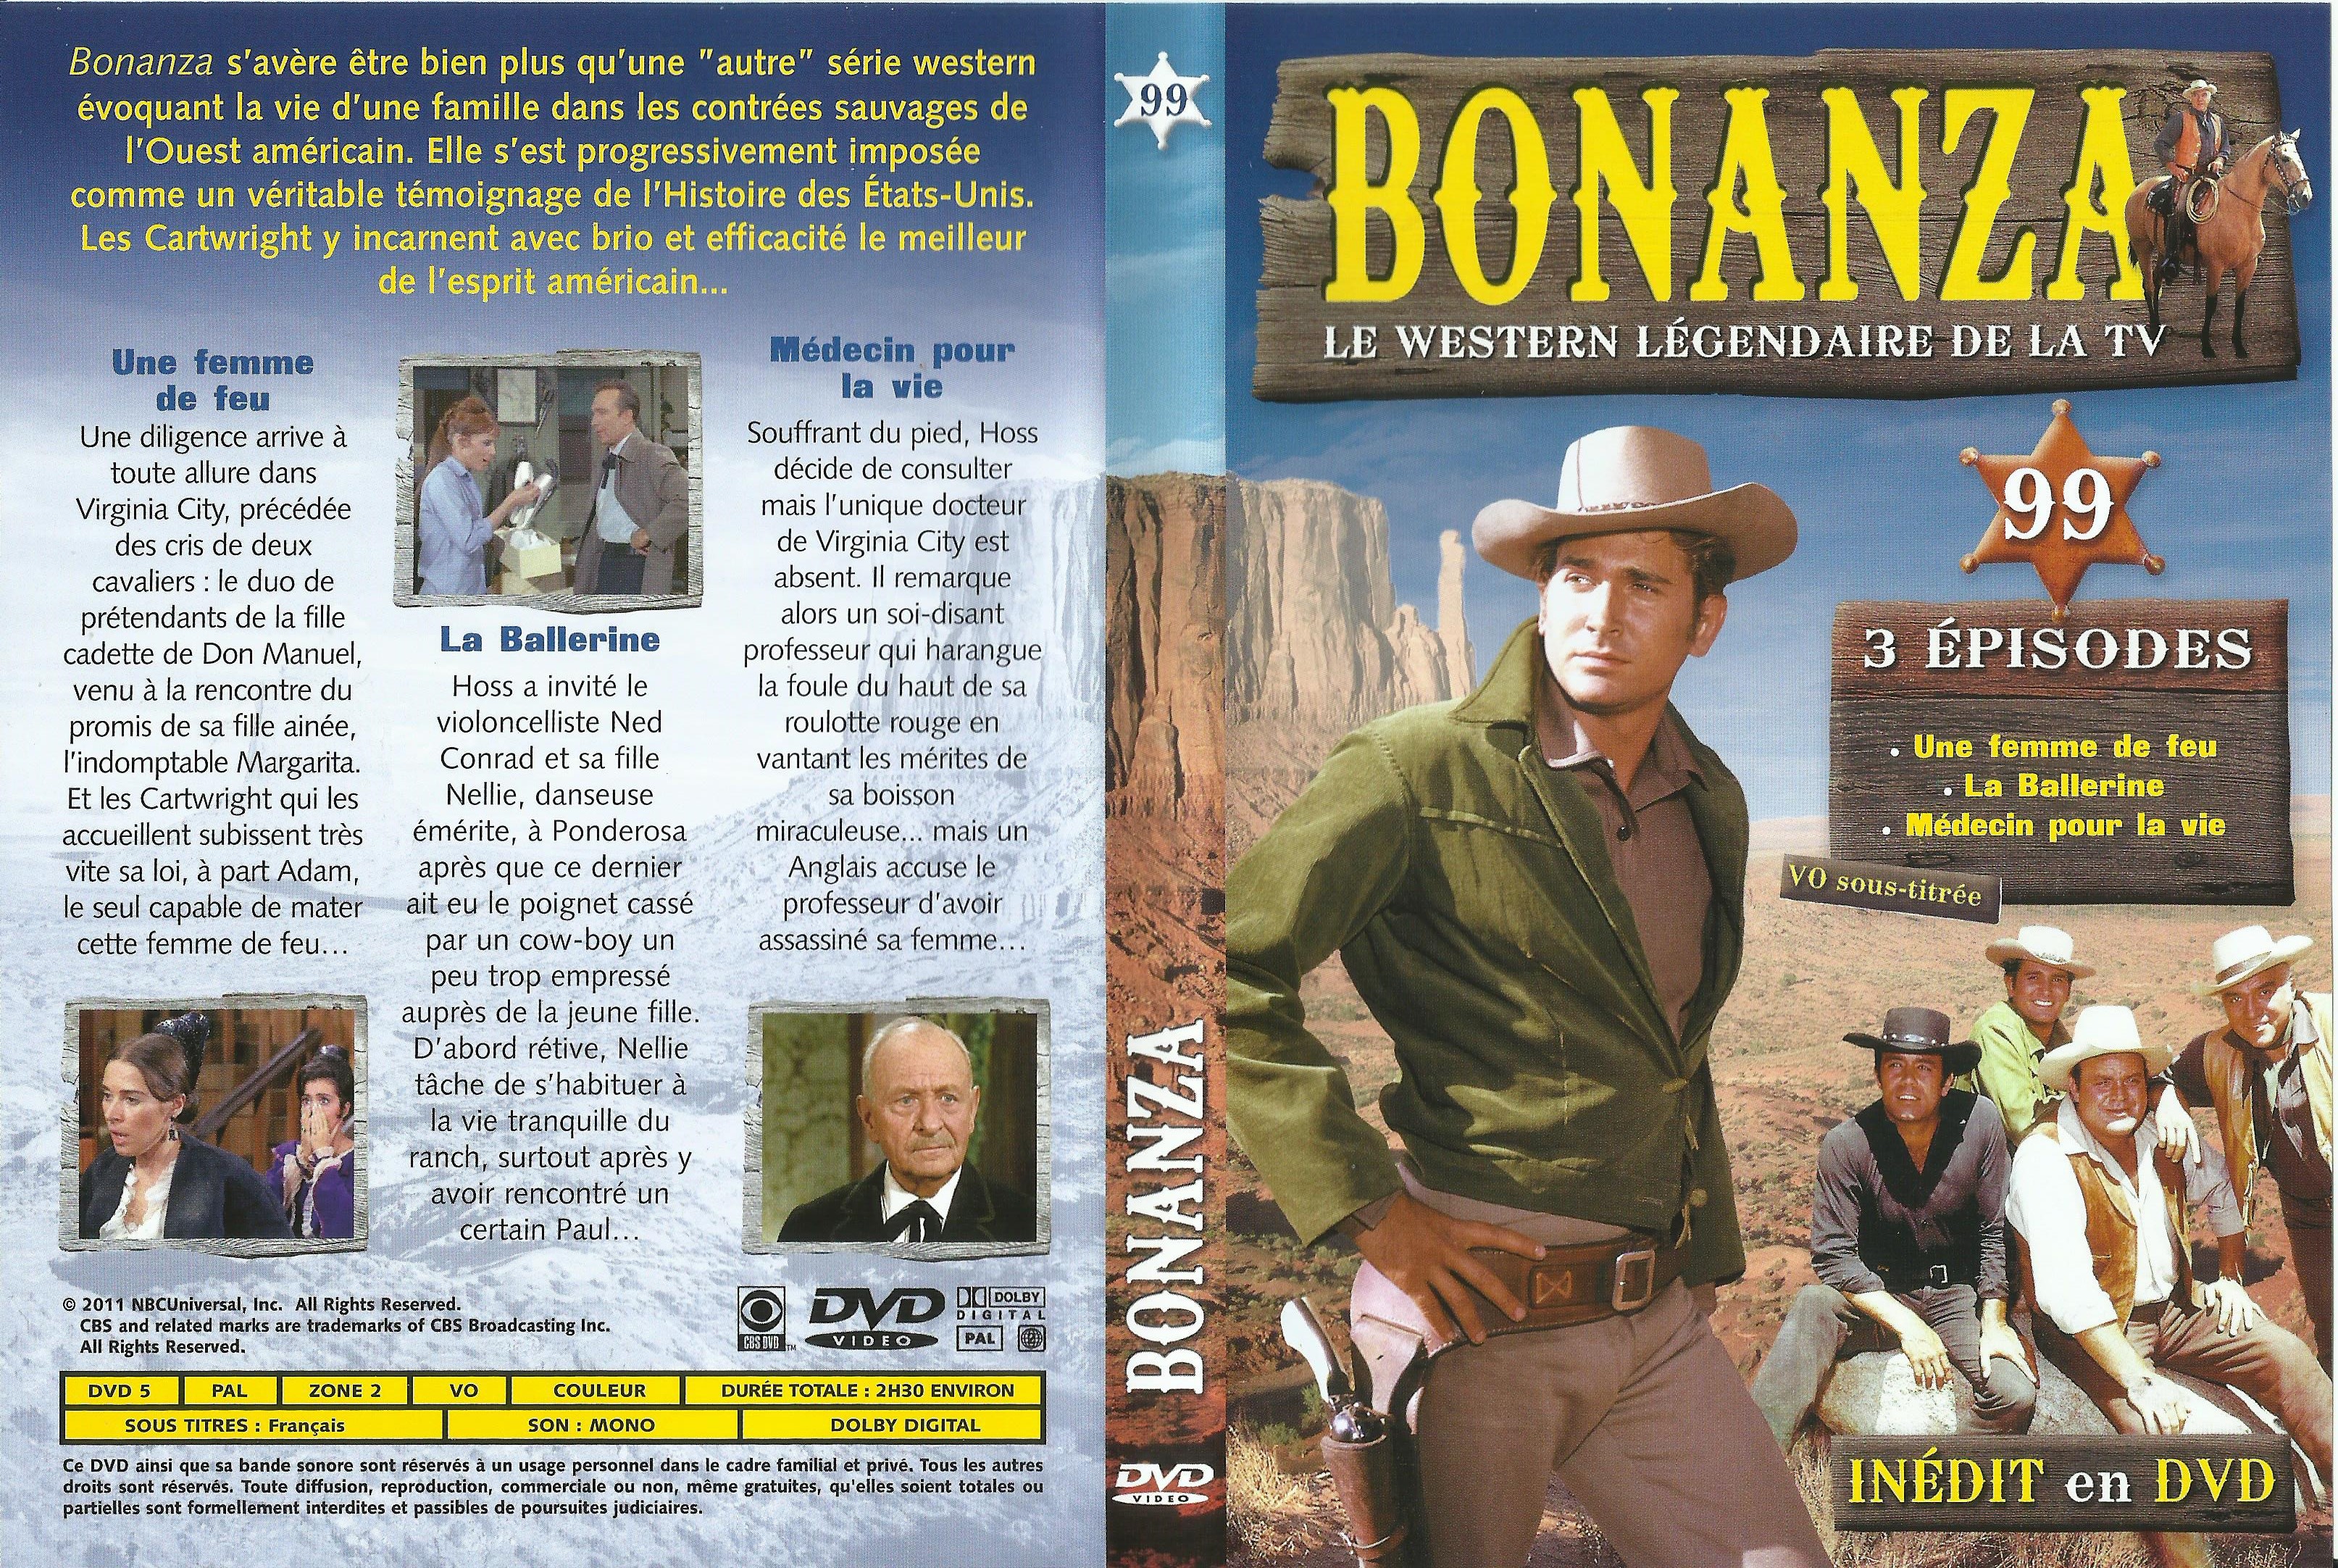 Jaquette DVD Bonanza vol 99